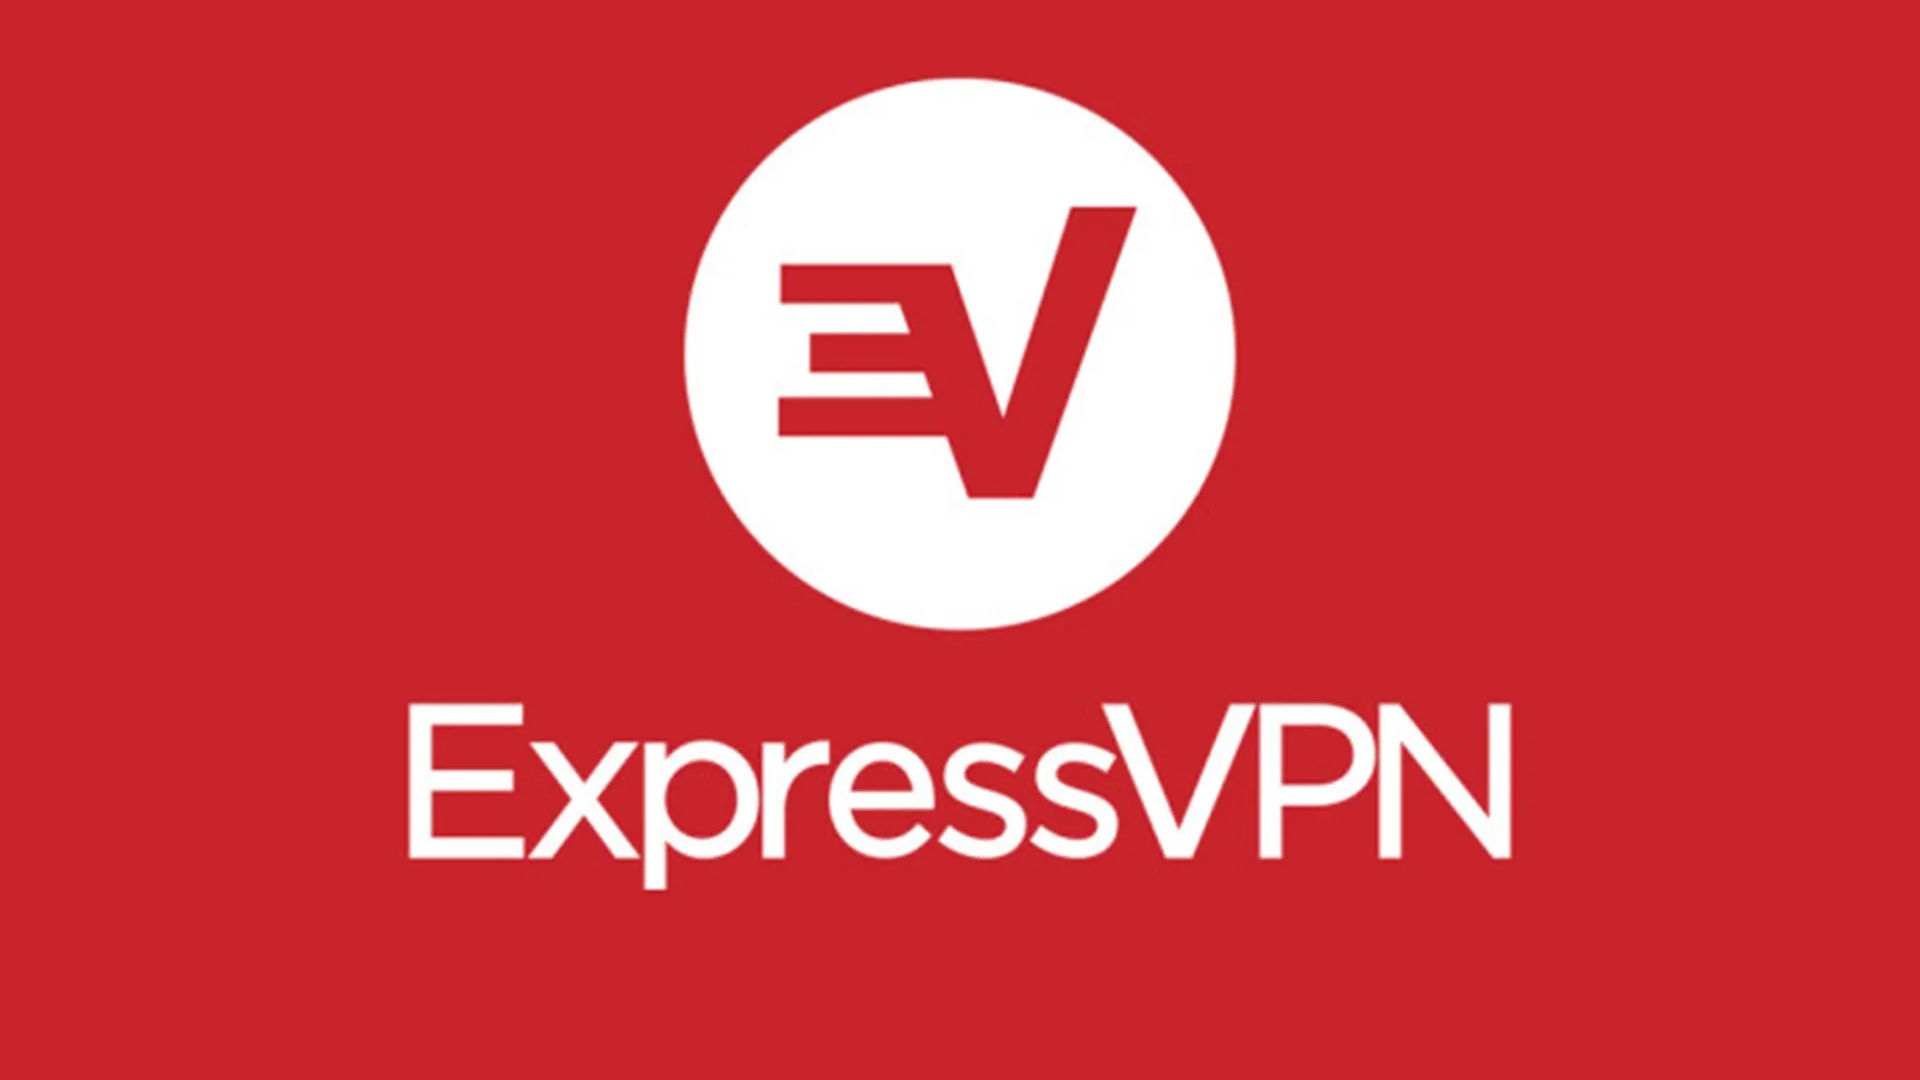 No-logs VPN services: ExpressVPN. Image shows the company logo.